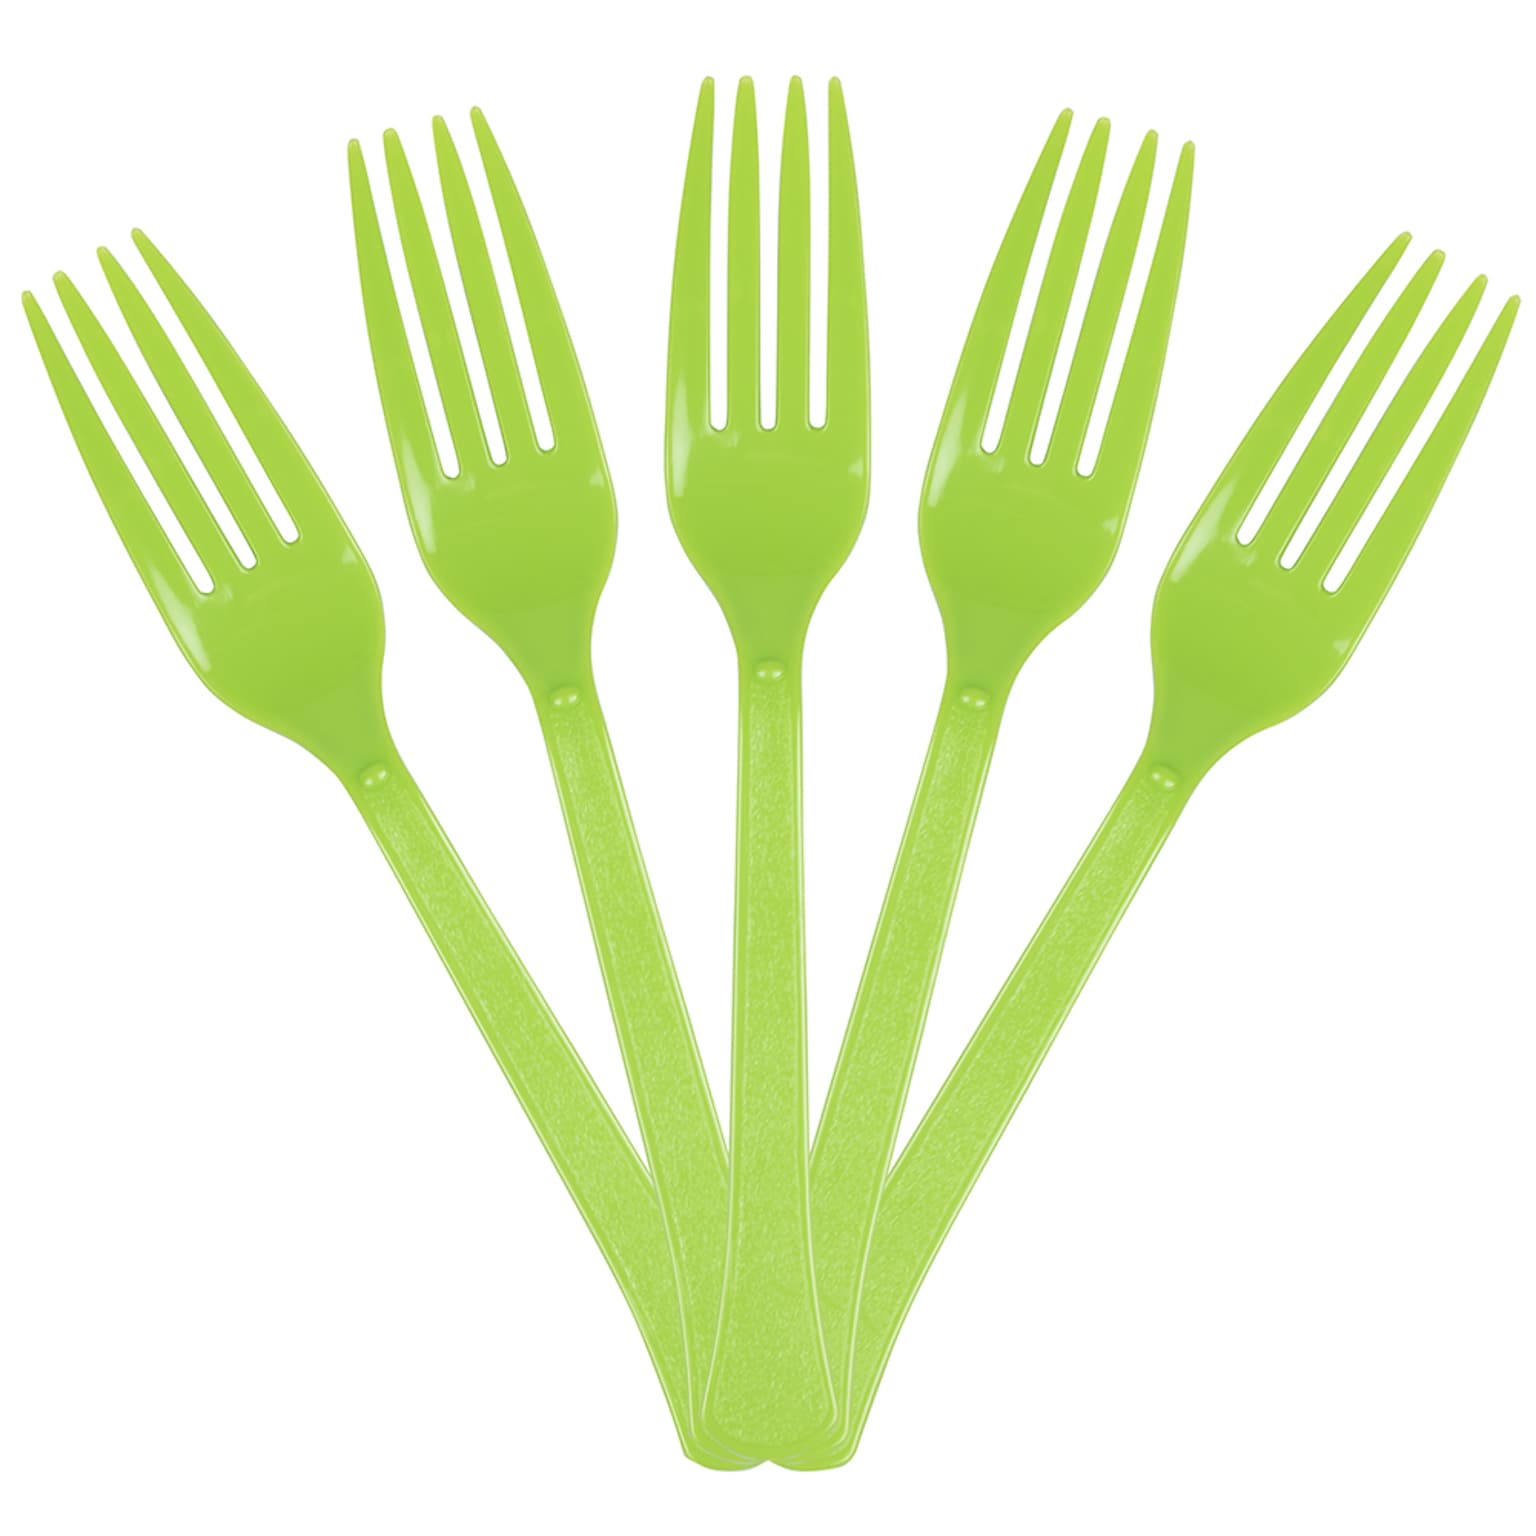 JAM PAPER Premium Utensils Party Pack, Plastic Forks, Lime Green, 48 Disposable Forks/Pack